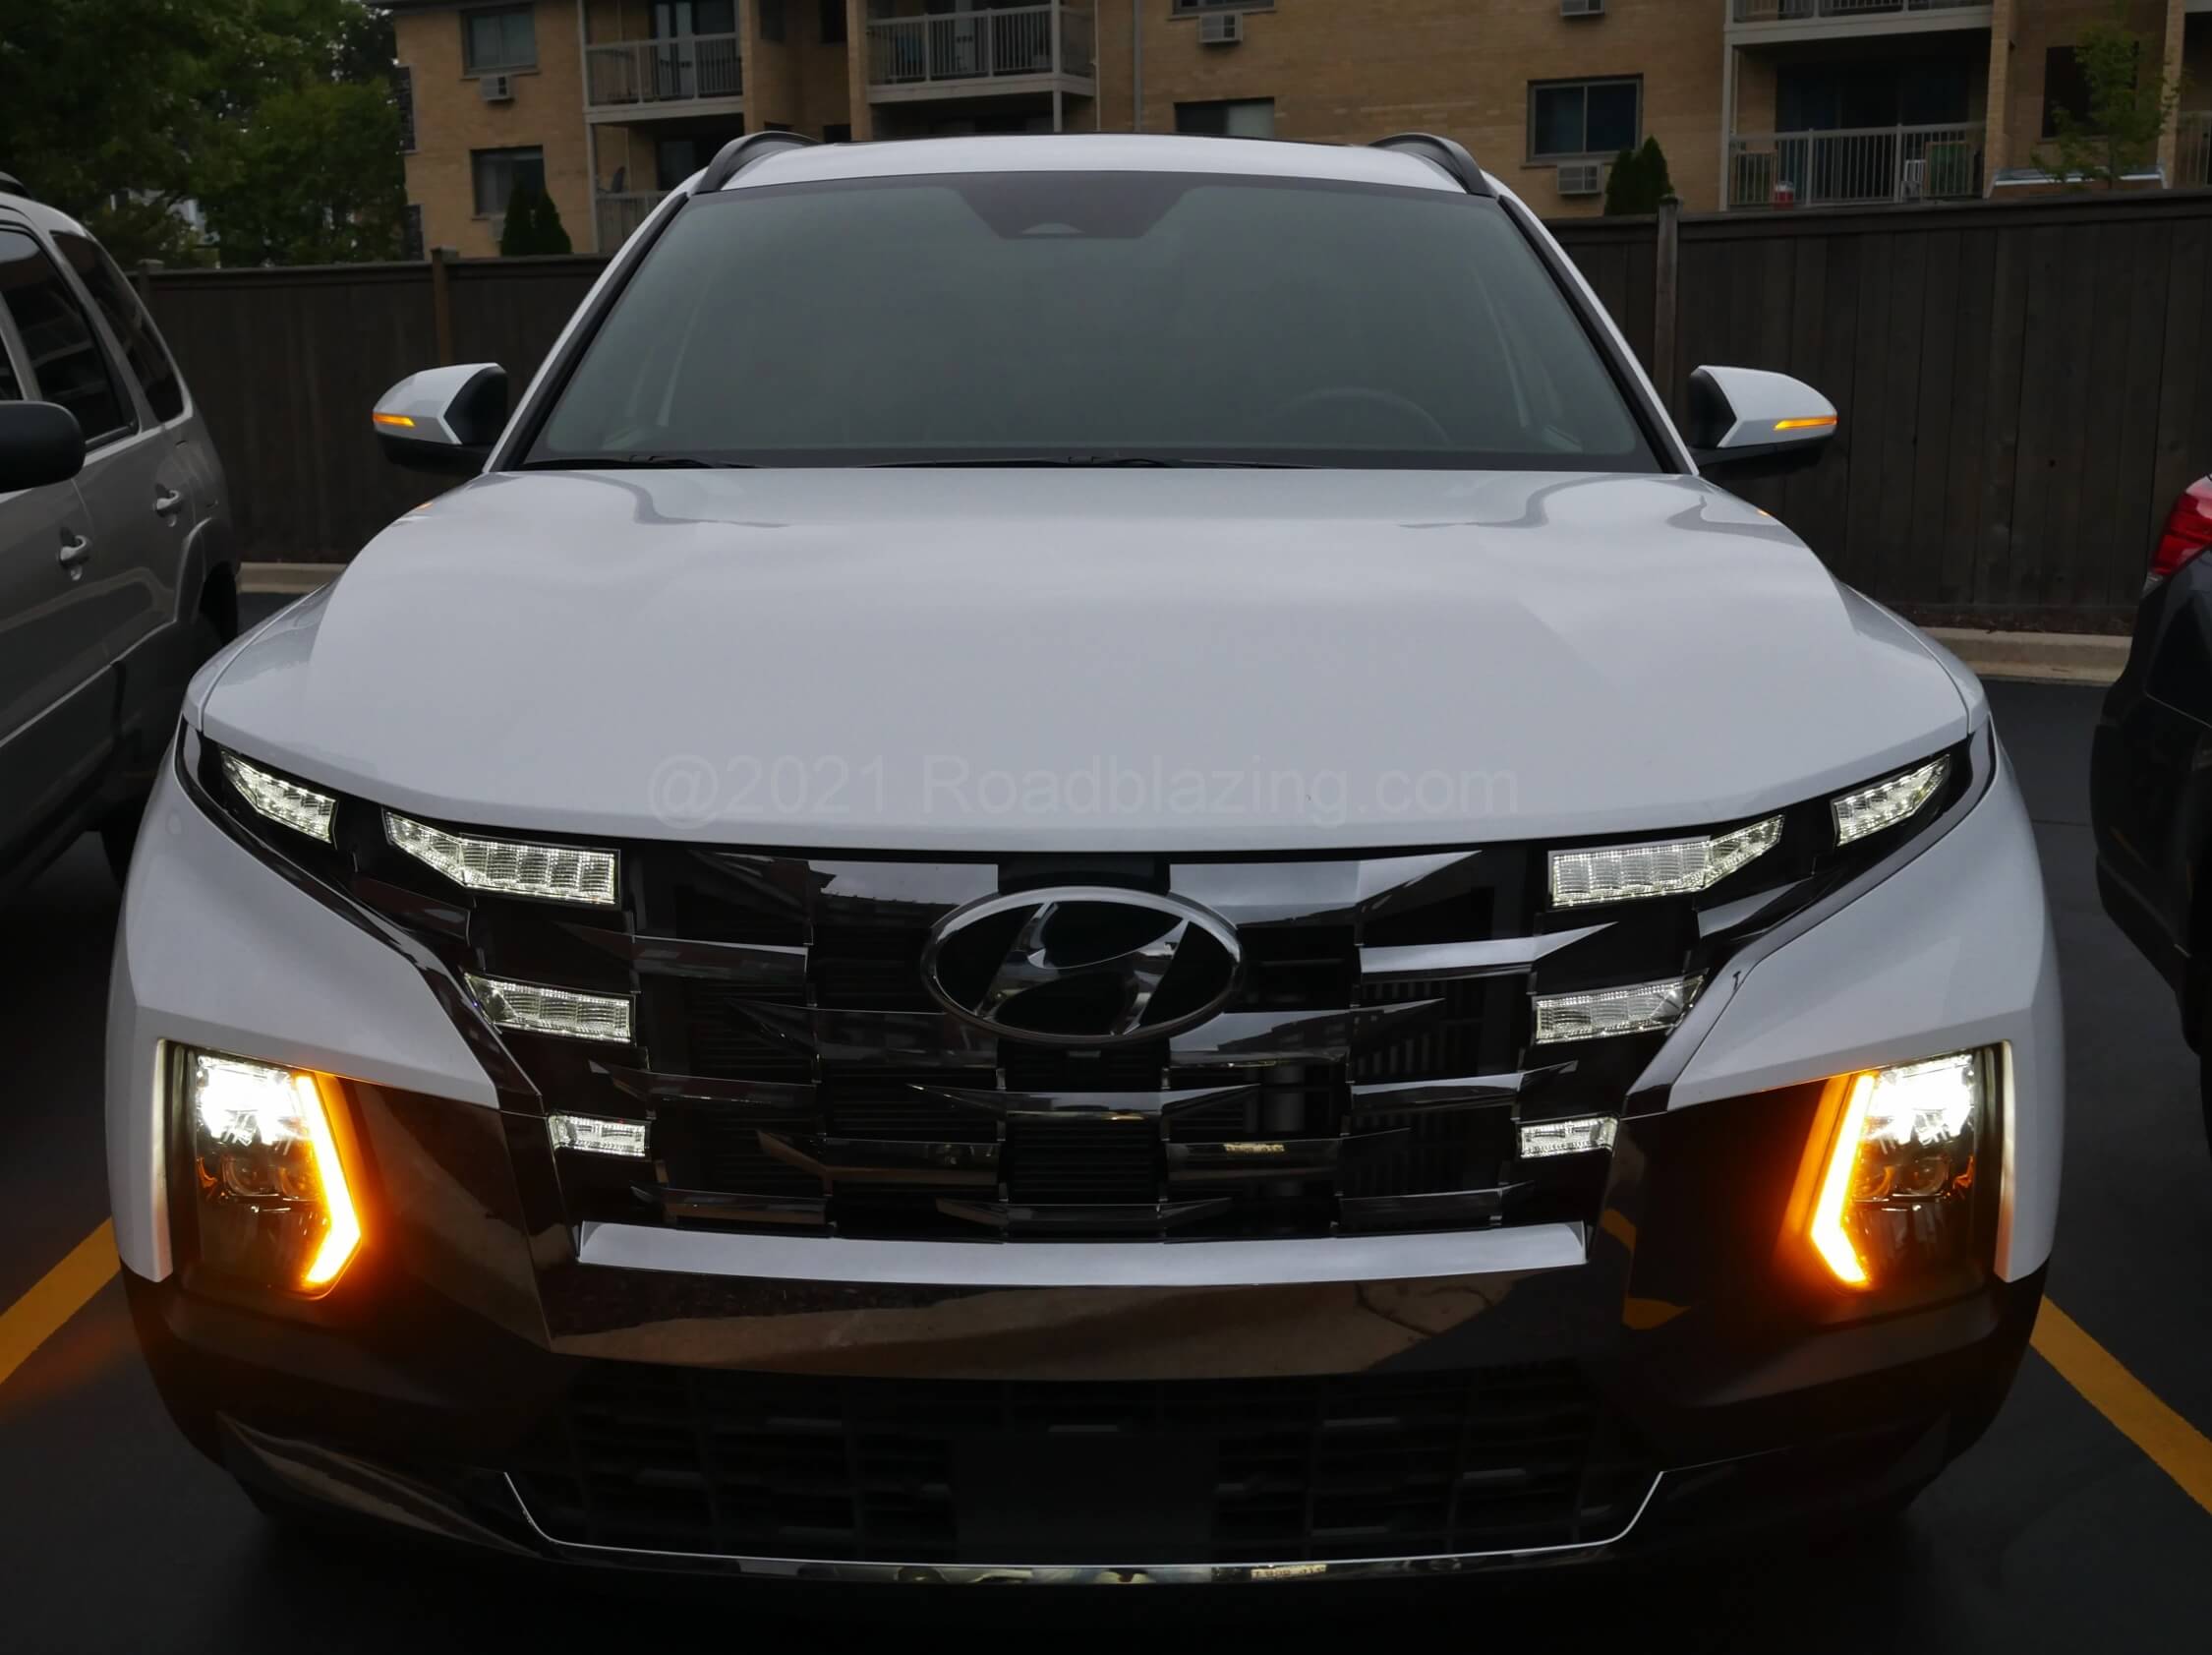 2022 Hyundai Santa Cruz 2.5T Limited AWD: Parametric Hidden LEDs form dual boomerang DRL array in grille